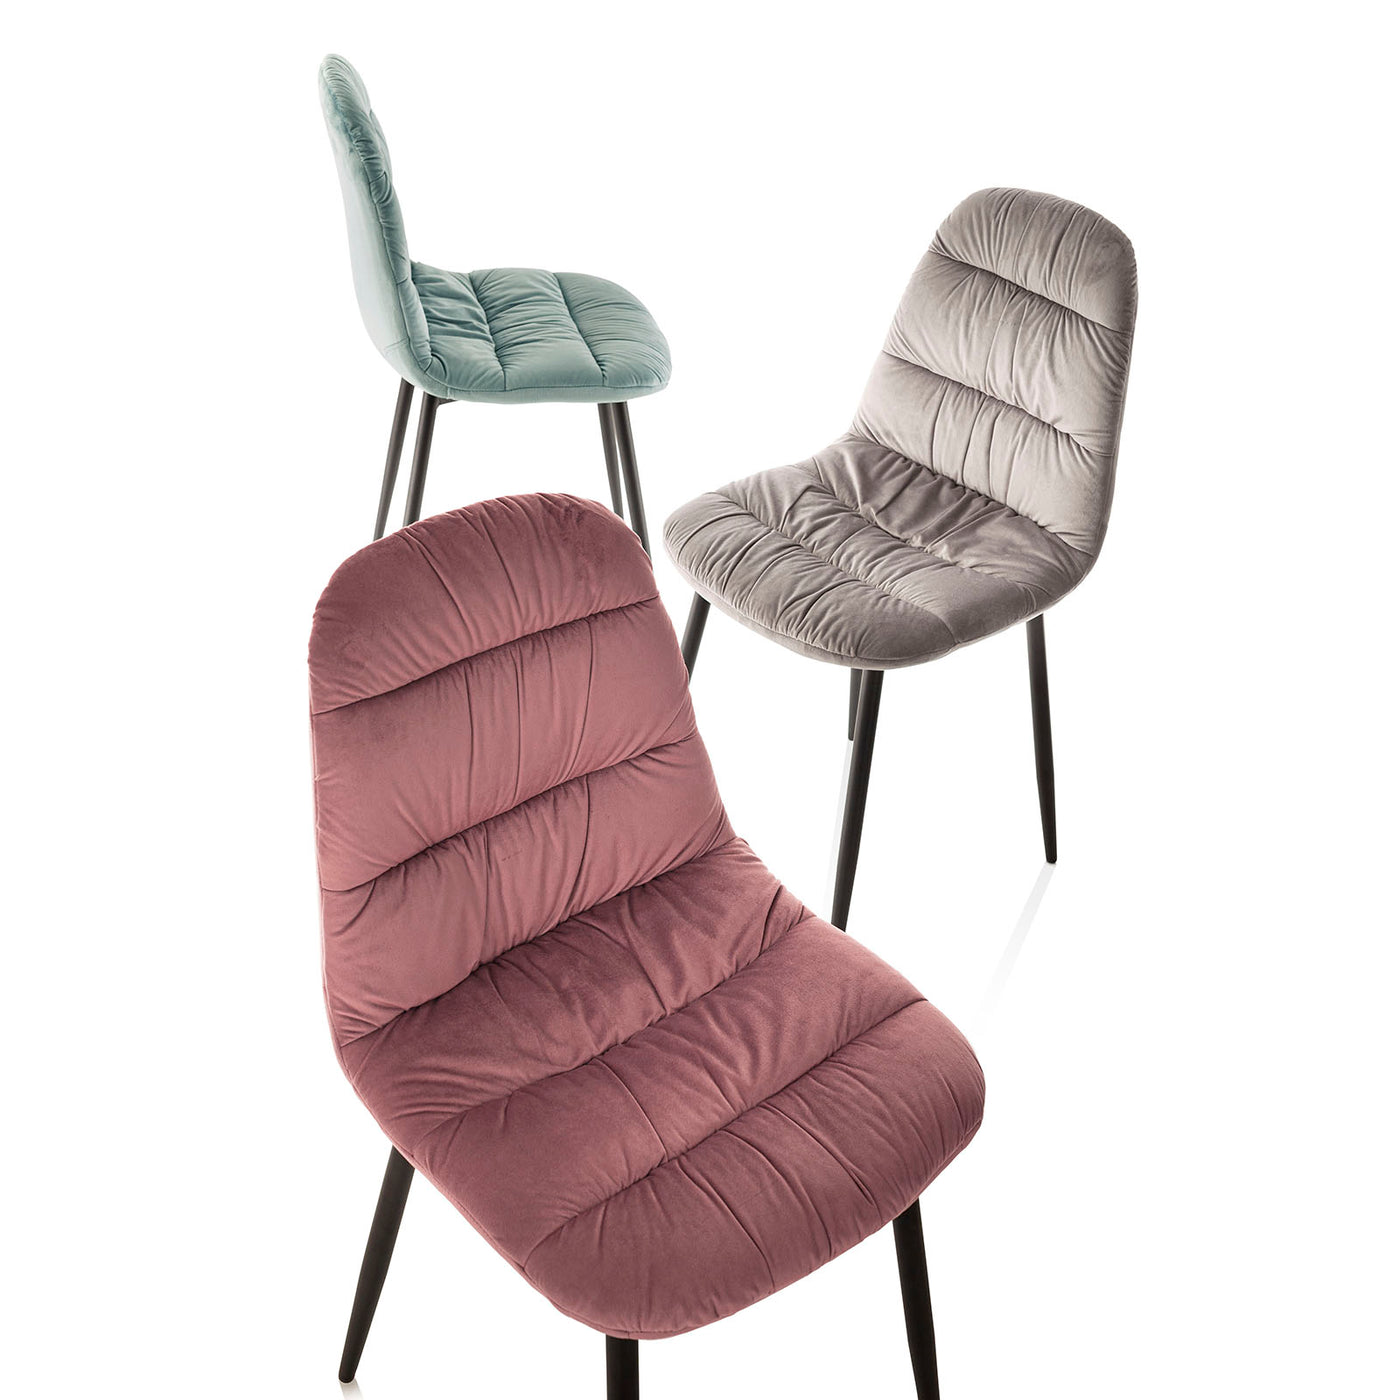 Set of 4 powder pink SANDY chairs